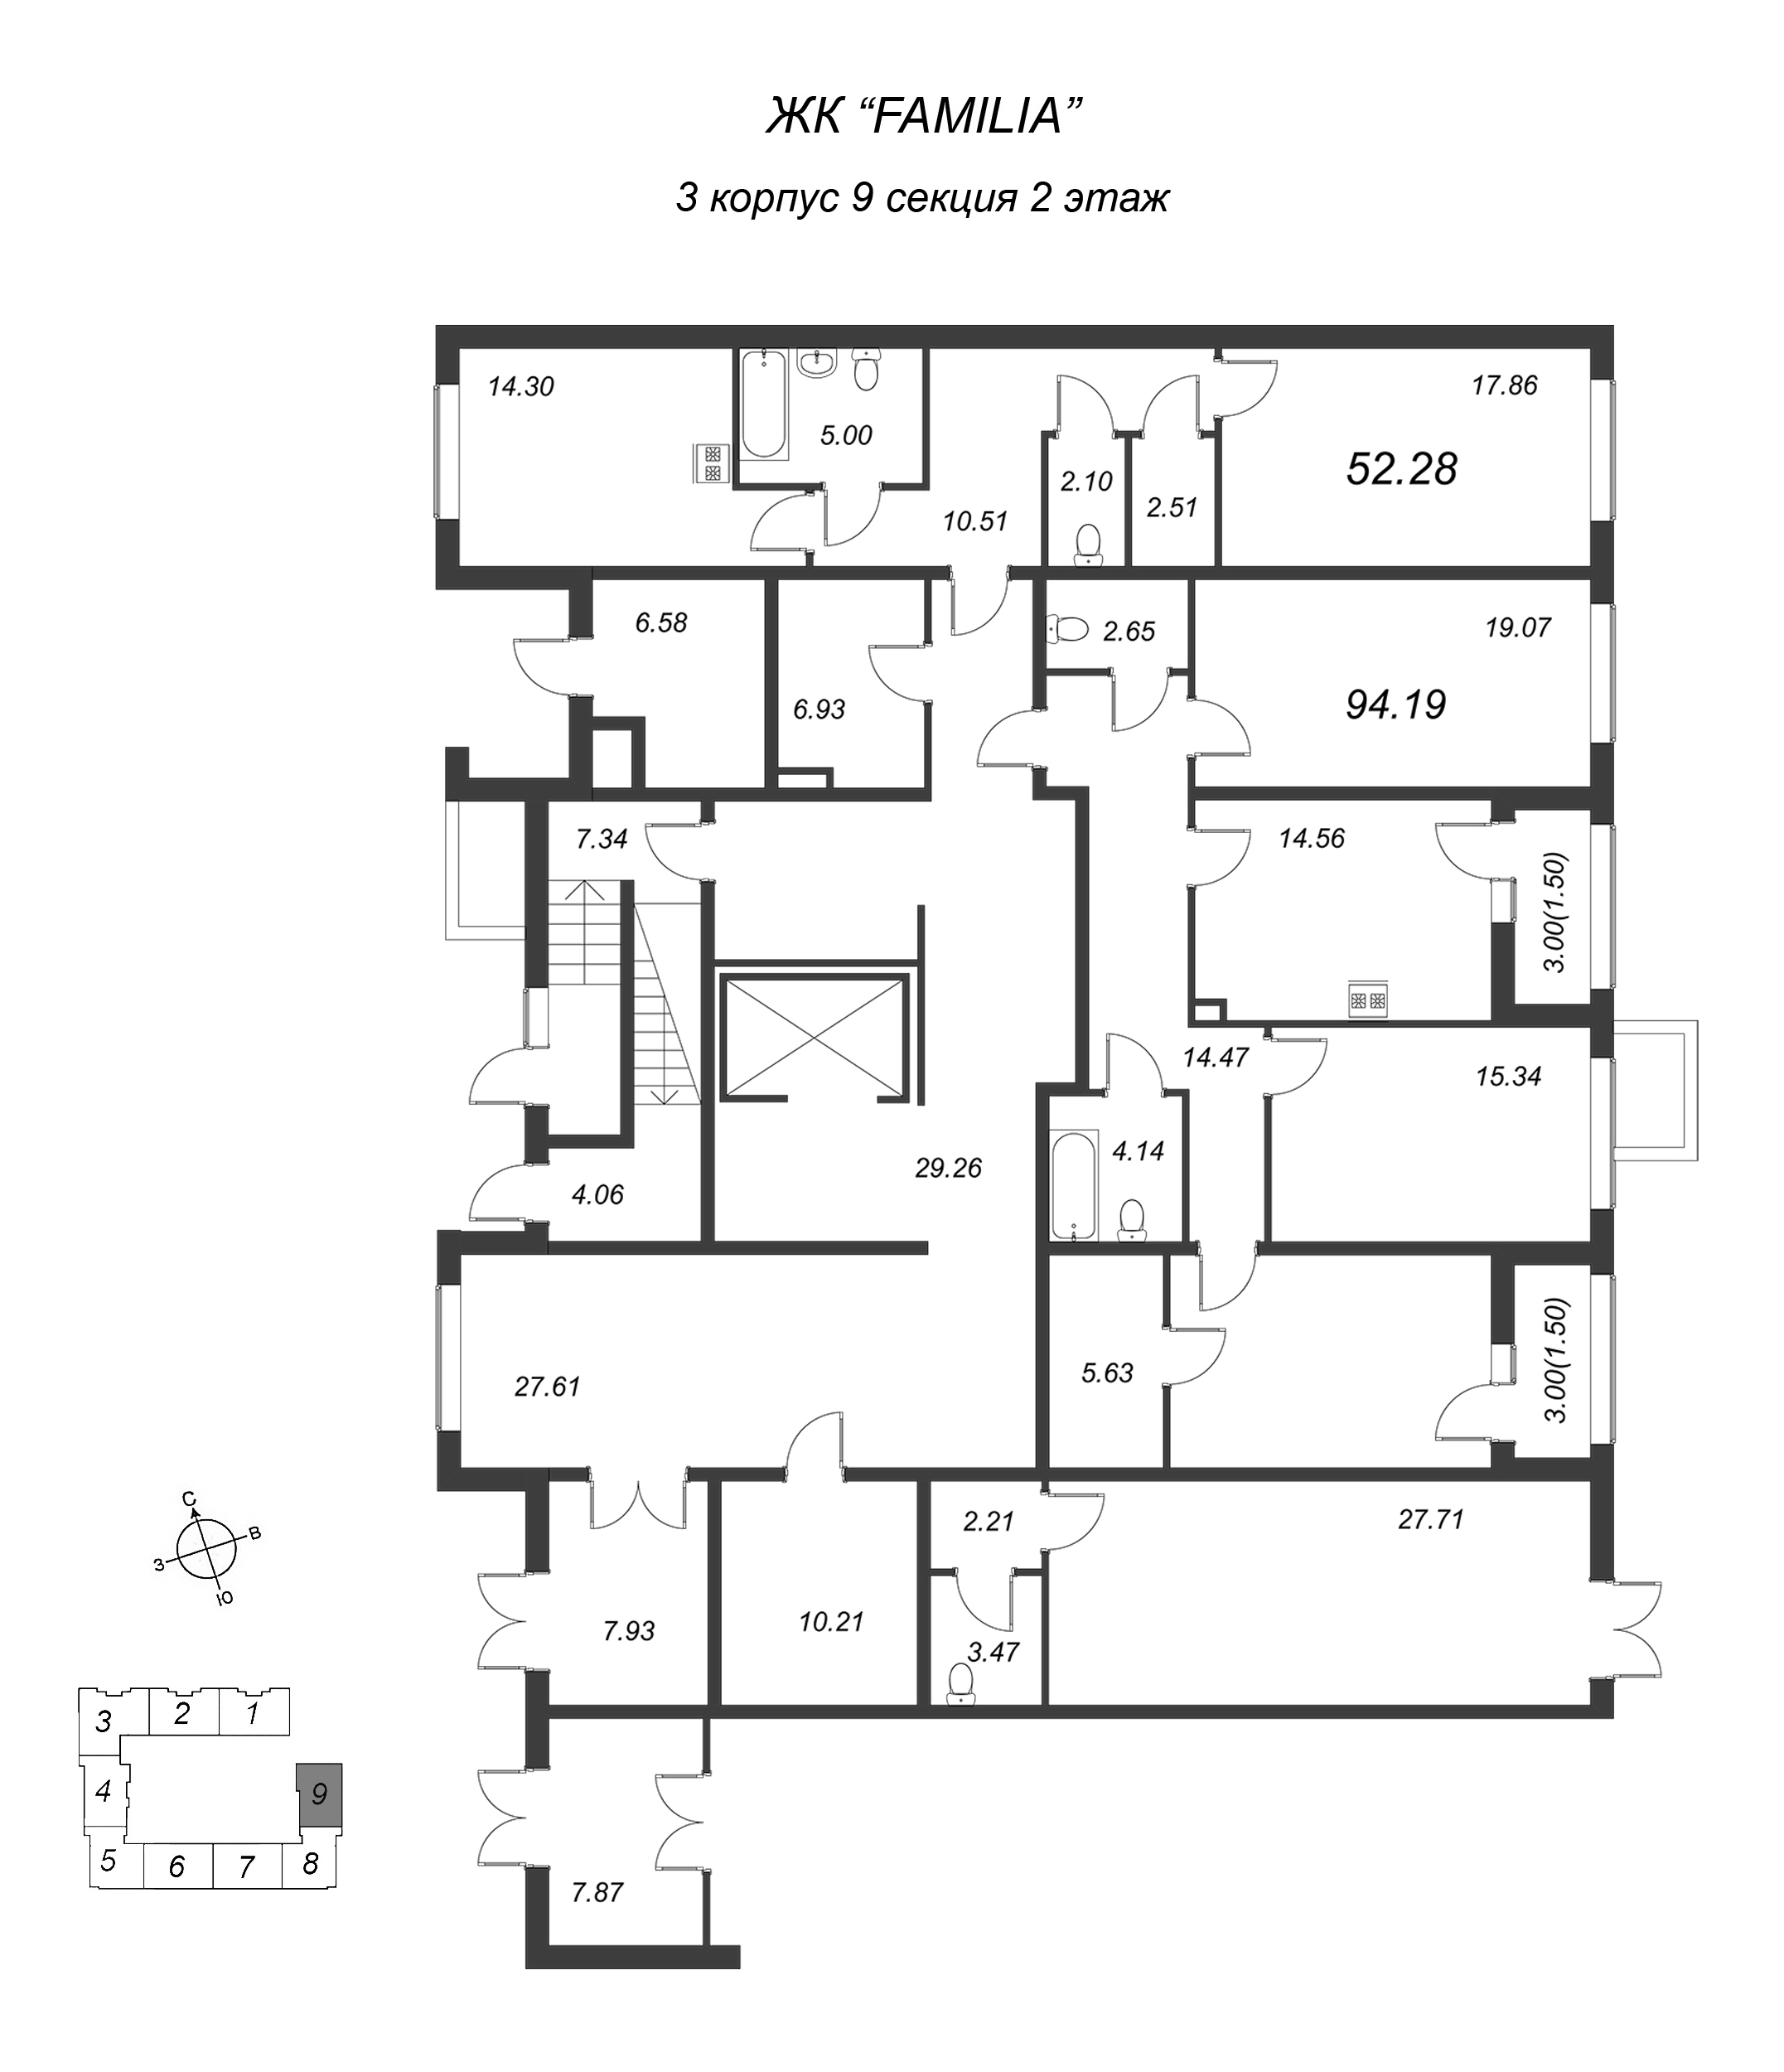 1-комнатная квартира, 52.4 м² в ЖК "FAMILIA" - планировка этажа